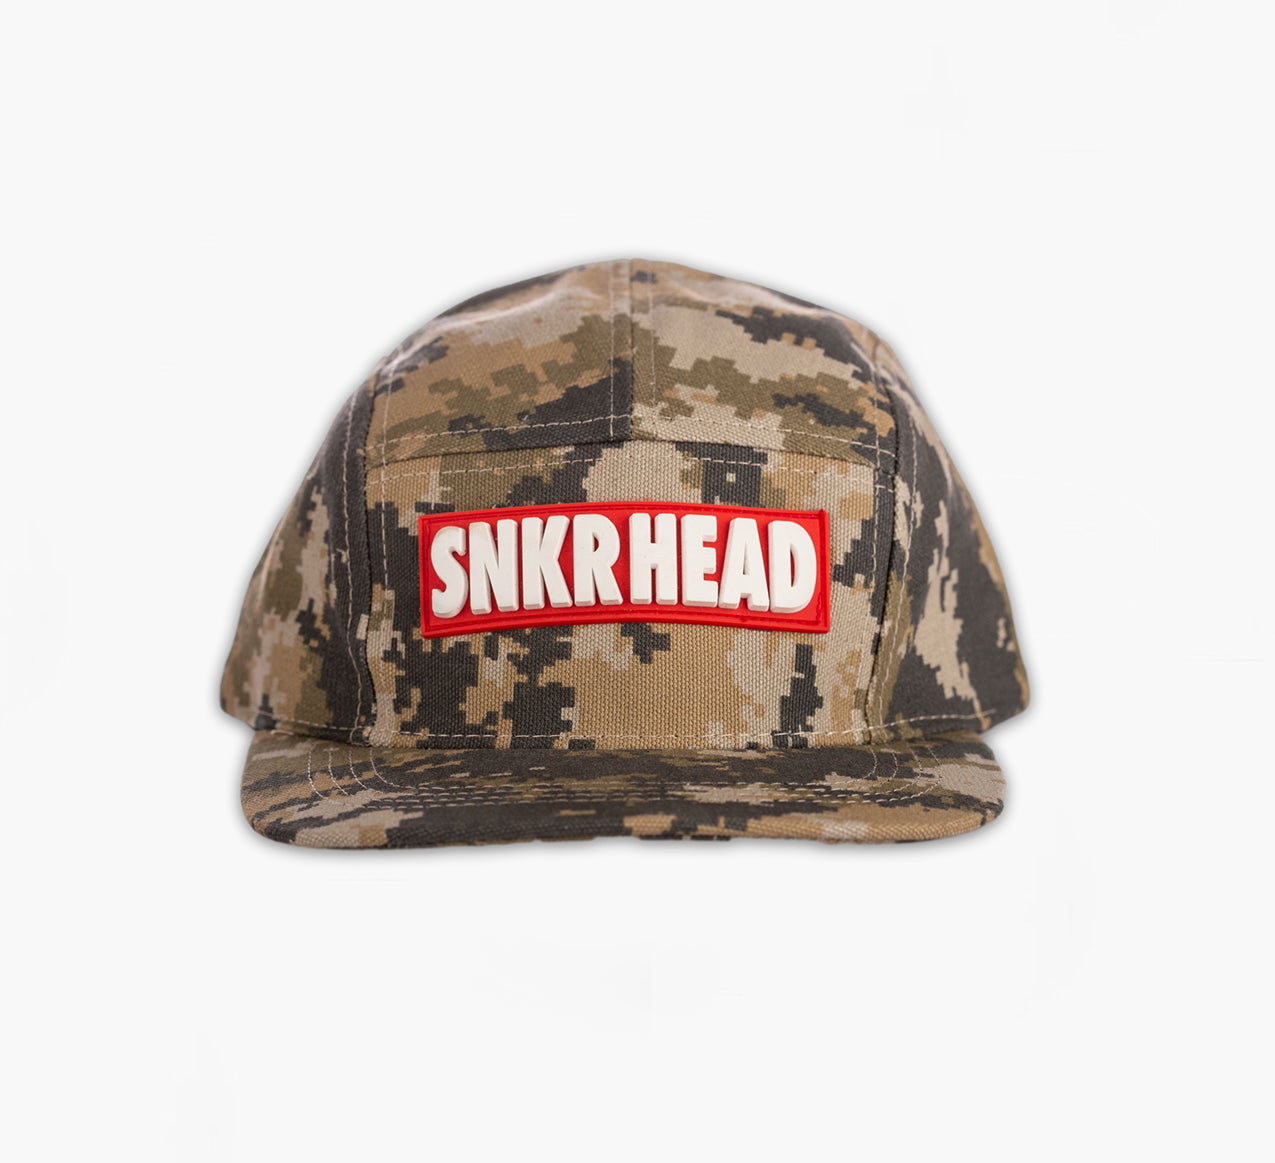 SNKRHEAD Digital Camo 5 panel Camper Strapback Hat